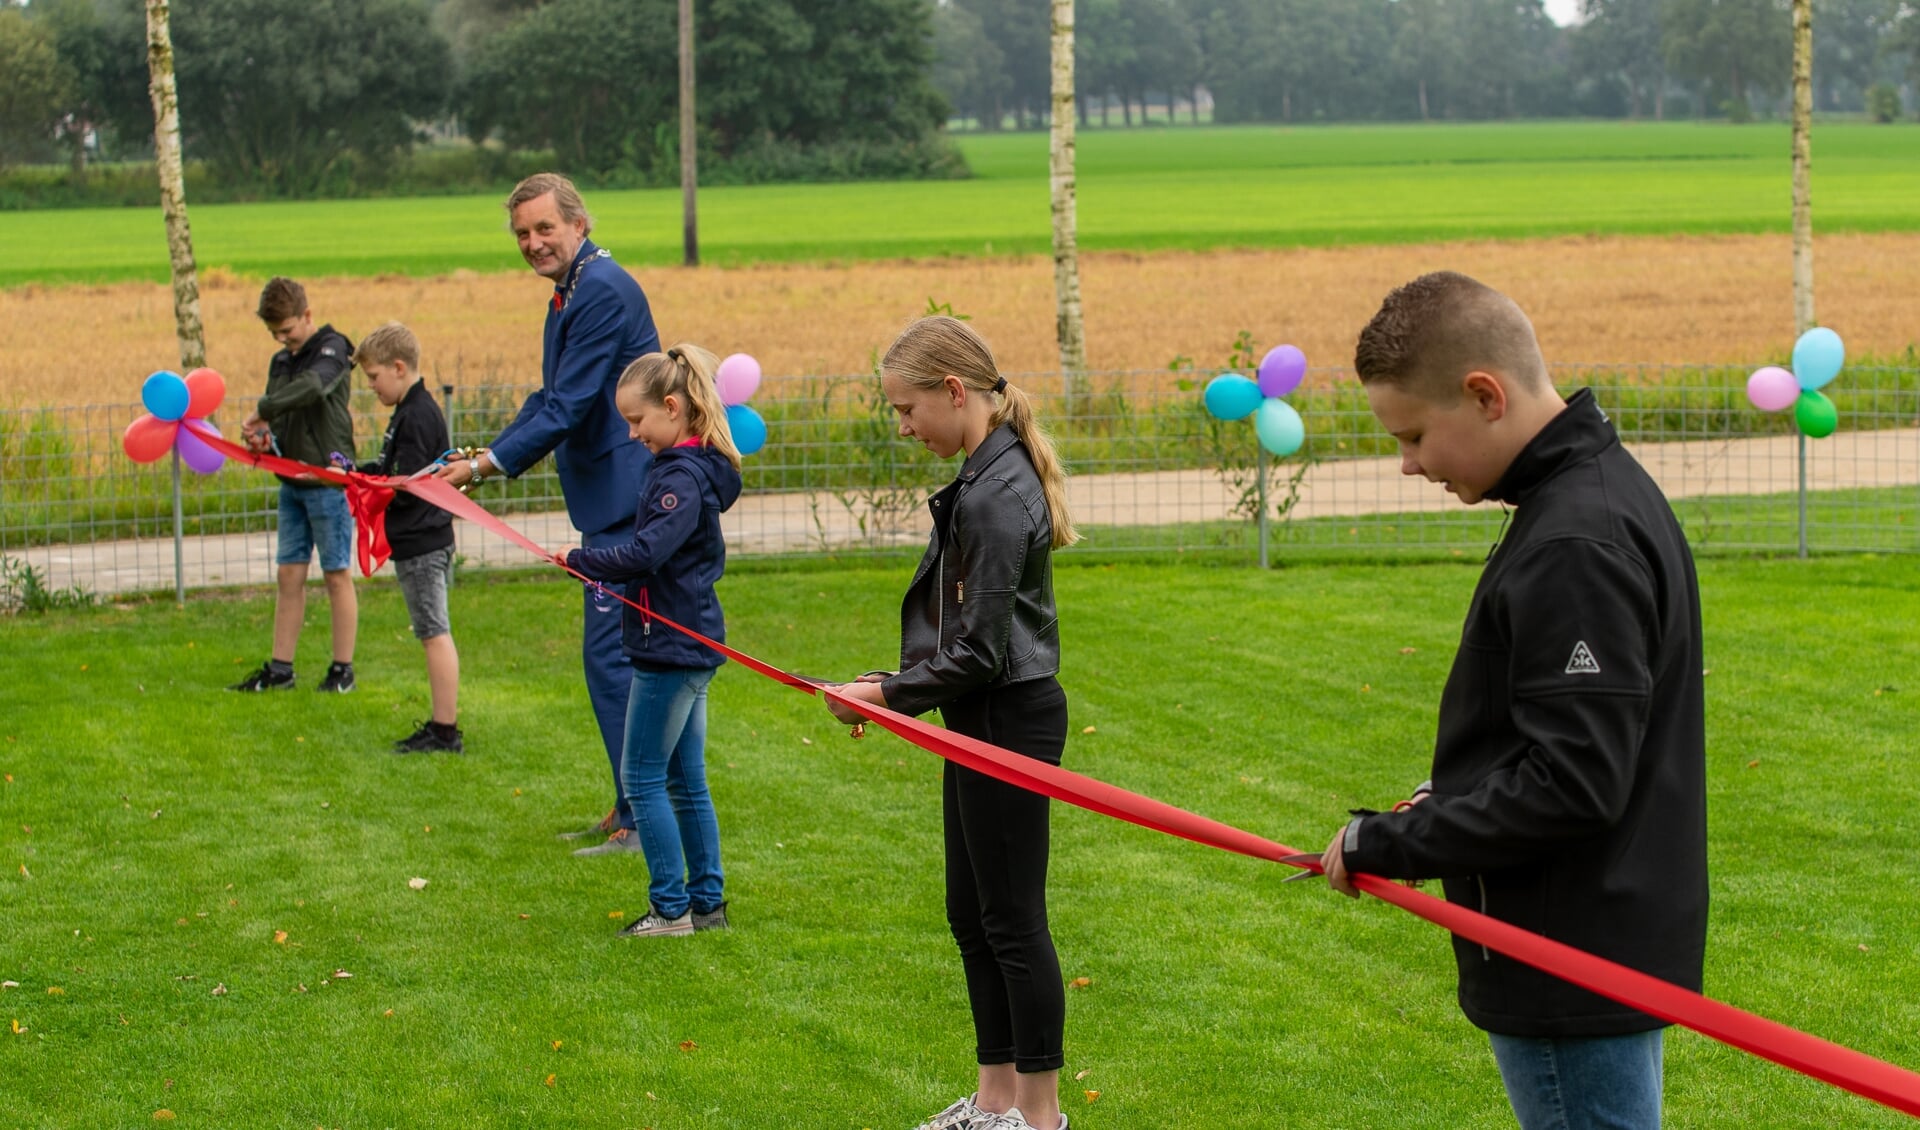 Burgemeester Stapelkamp opent de speeltuin met Jort en Sem Vreman en Tieme, Jinte en Mirle Lankveld. Foto: Marcel te Brake fotografie